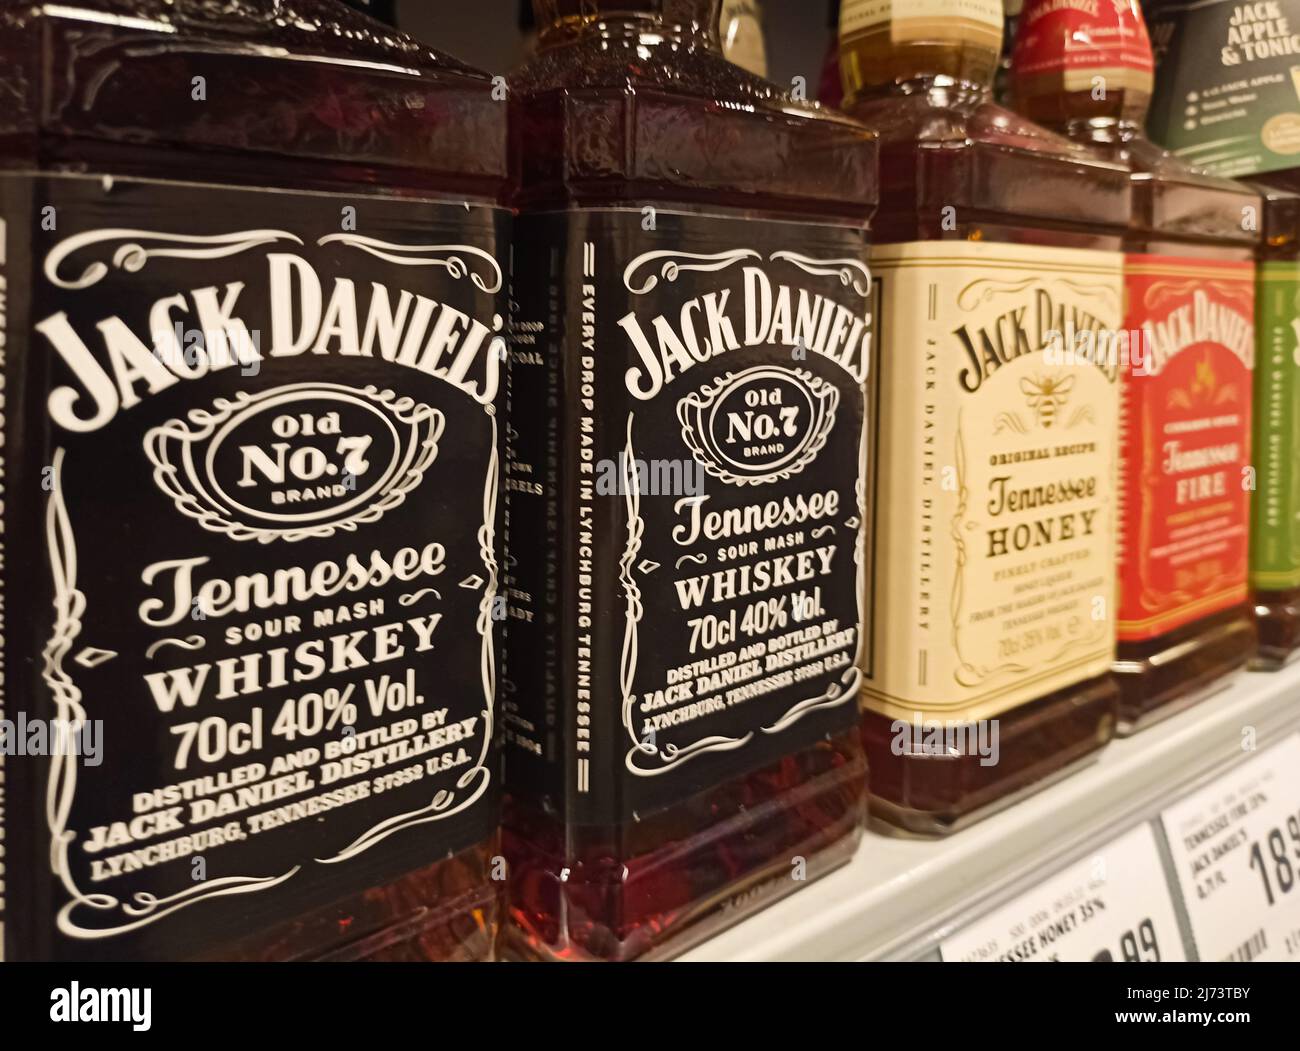 https://c8.alamy.com/comp/2J73TBY/jack-daniels-bourbon-whisky-seen-at-rewe-supermarket-photo-by-igor-golovniov-sopa-imagessipa-usa-2J73TBY.jpg